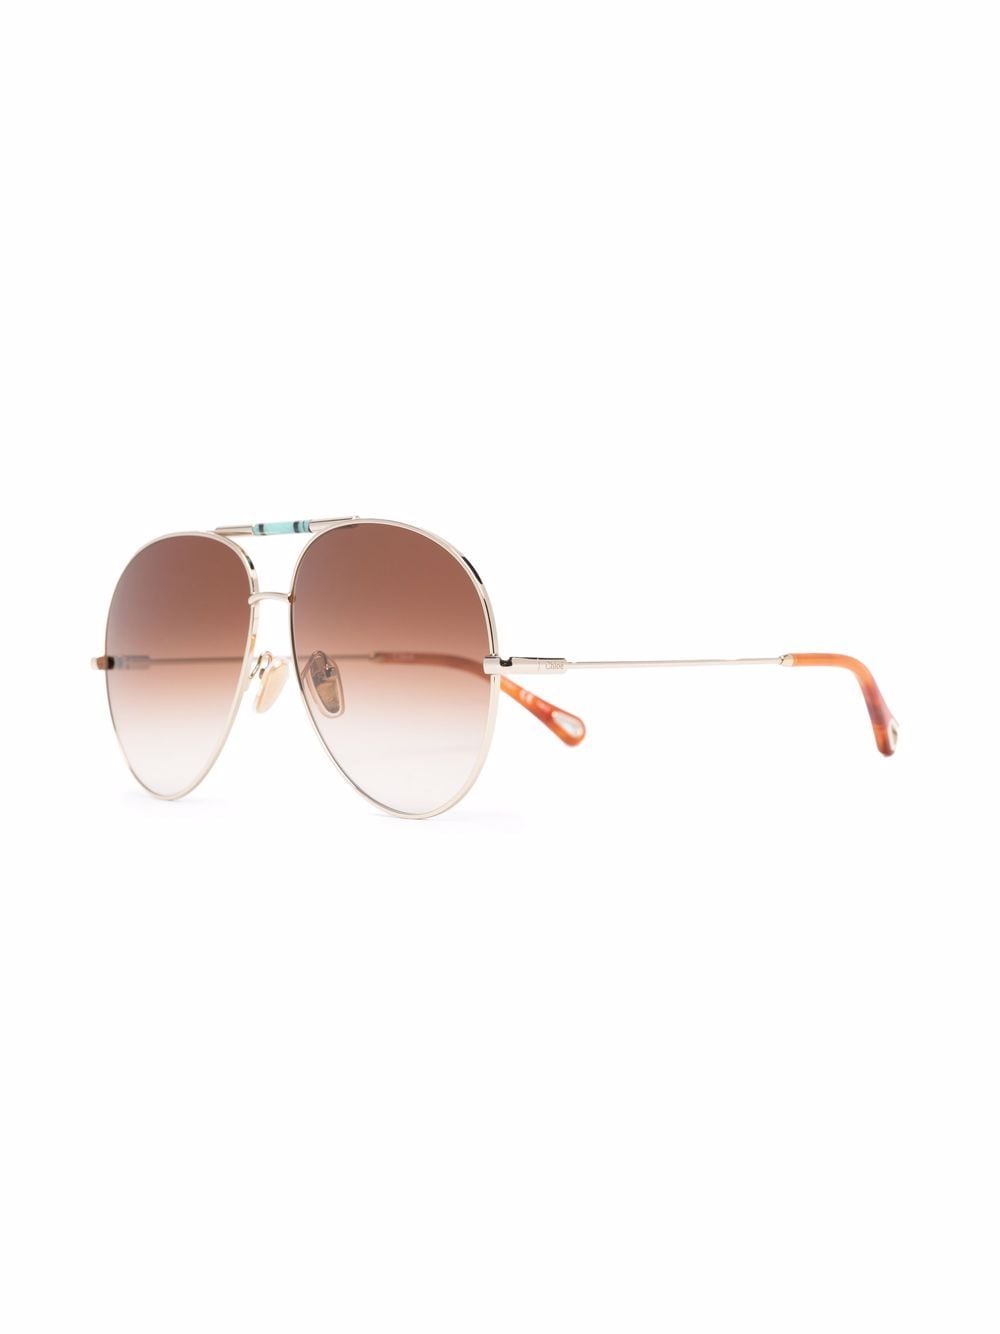 Brown gradient pilot sunglasses